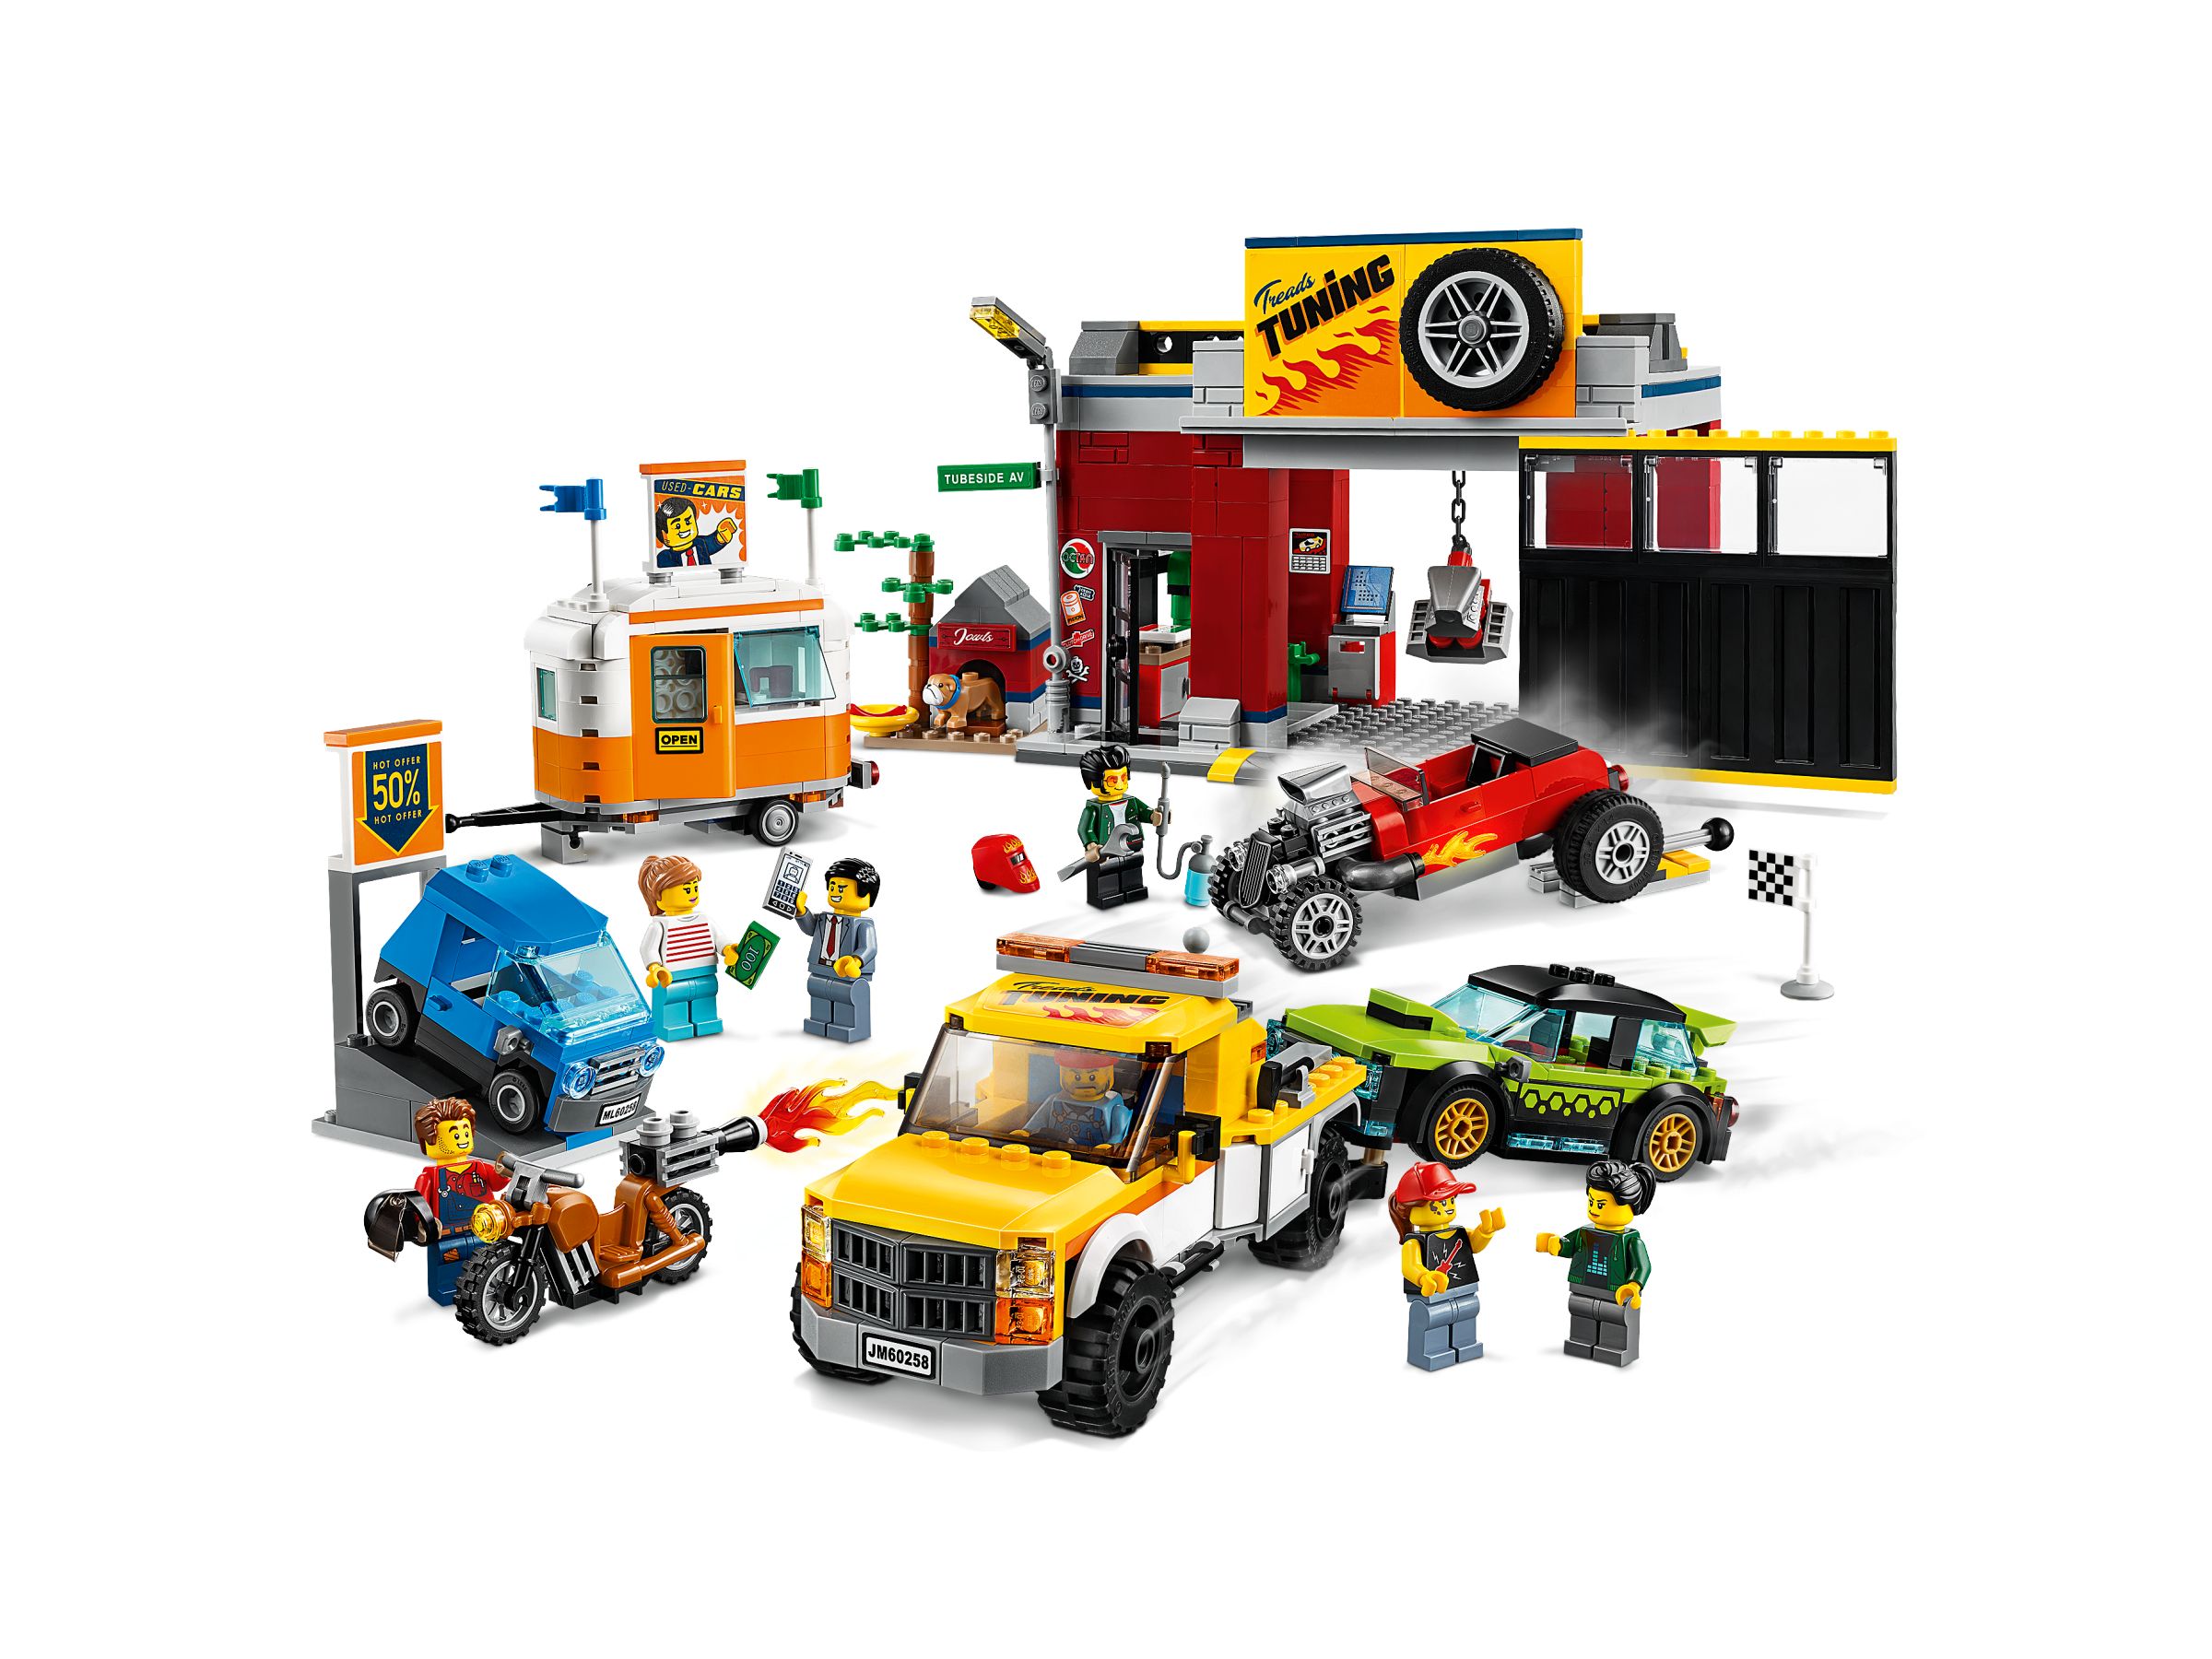 LEGO City 60258 Tuning-Werkstatt LEGO_60258_alt2.jpg